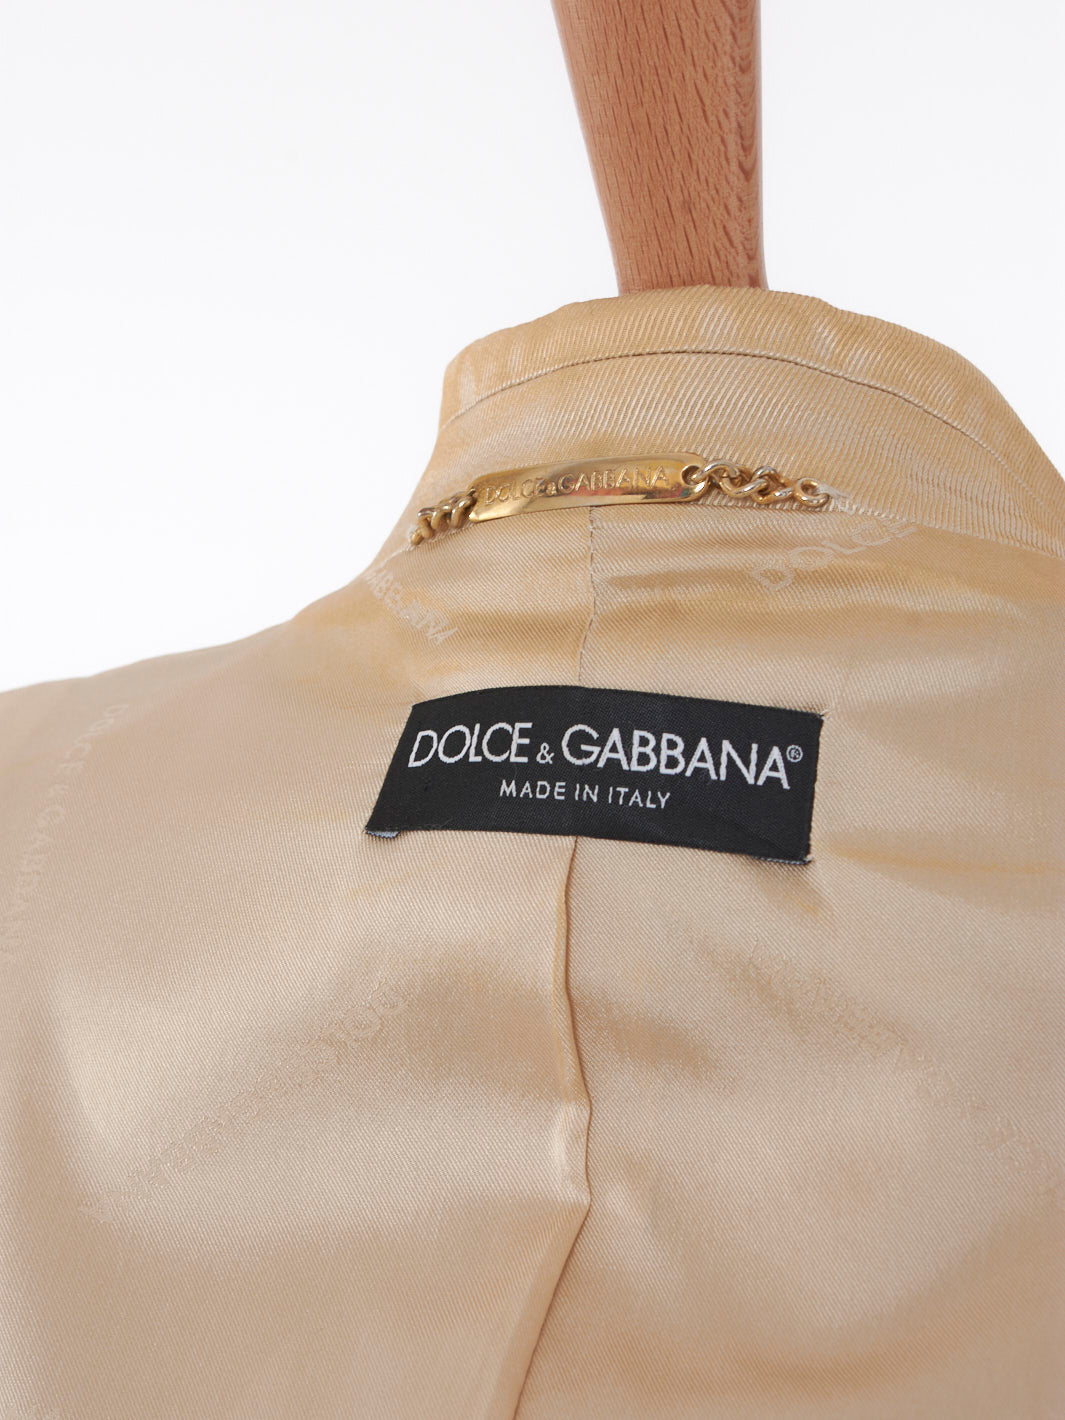 DOLCE&GABBANA Stretch Cotton Suit